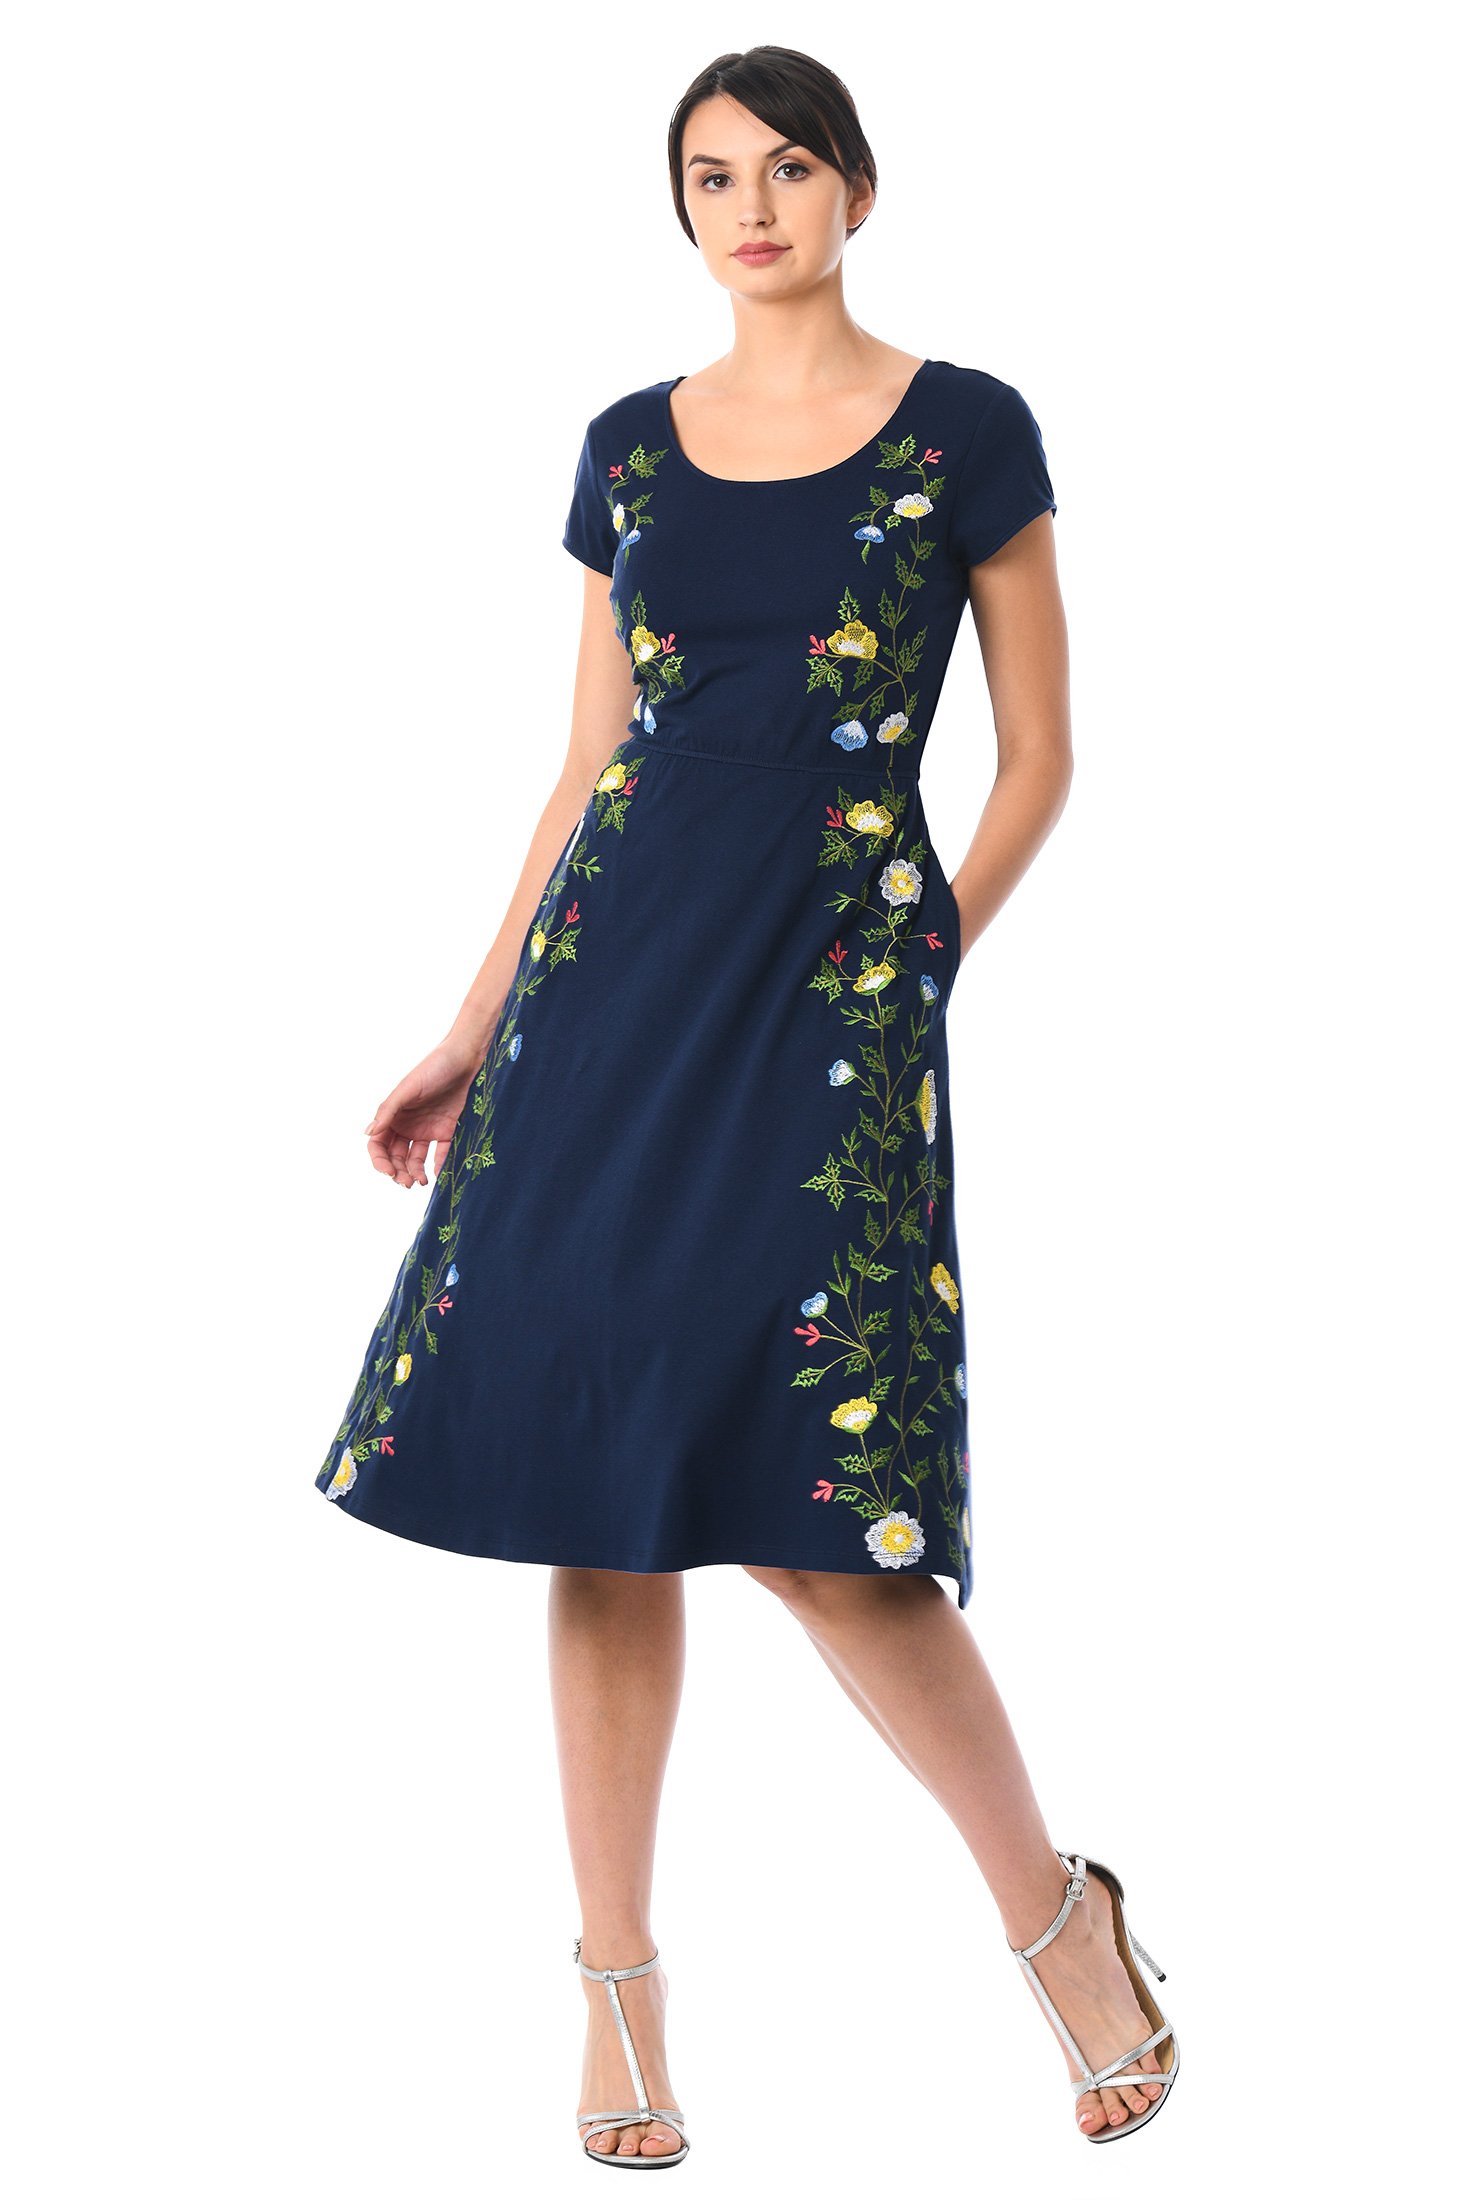 Shop Floral embellished cotton knit dress | eShakti